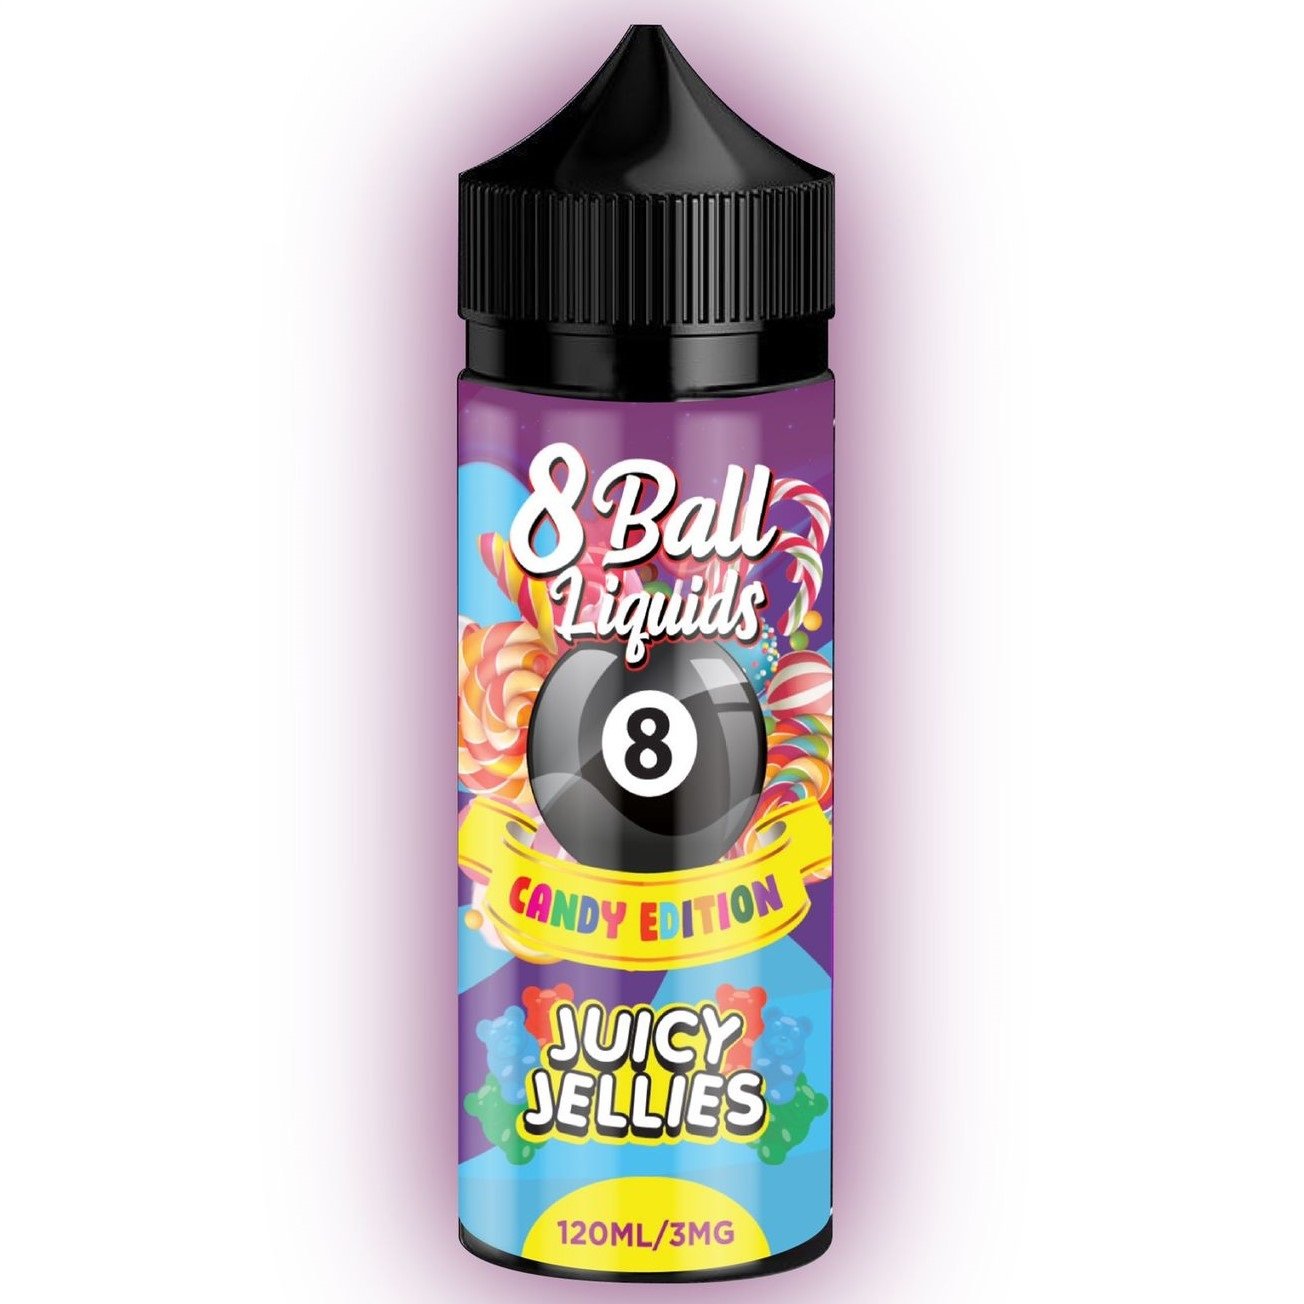 Juicy Jellies by 8 Ball Liquids 120ml